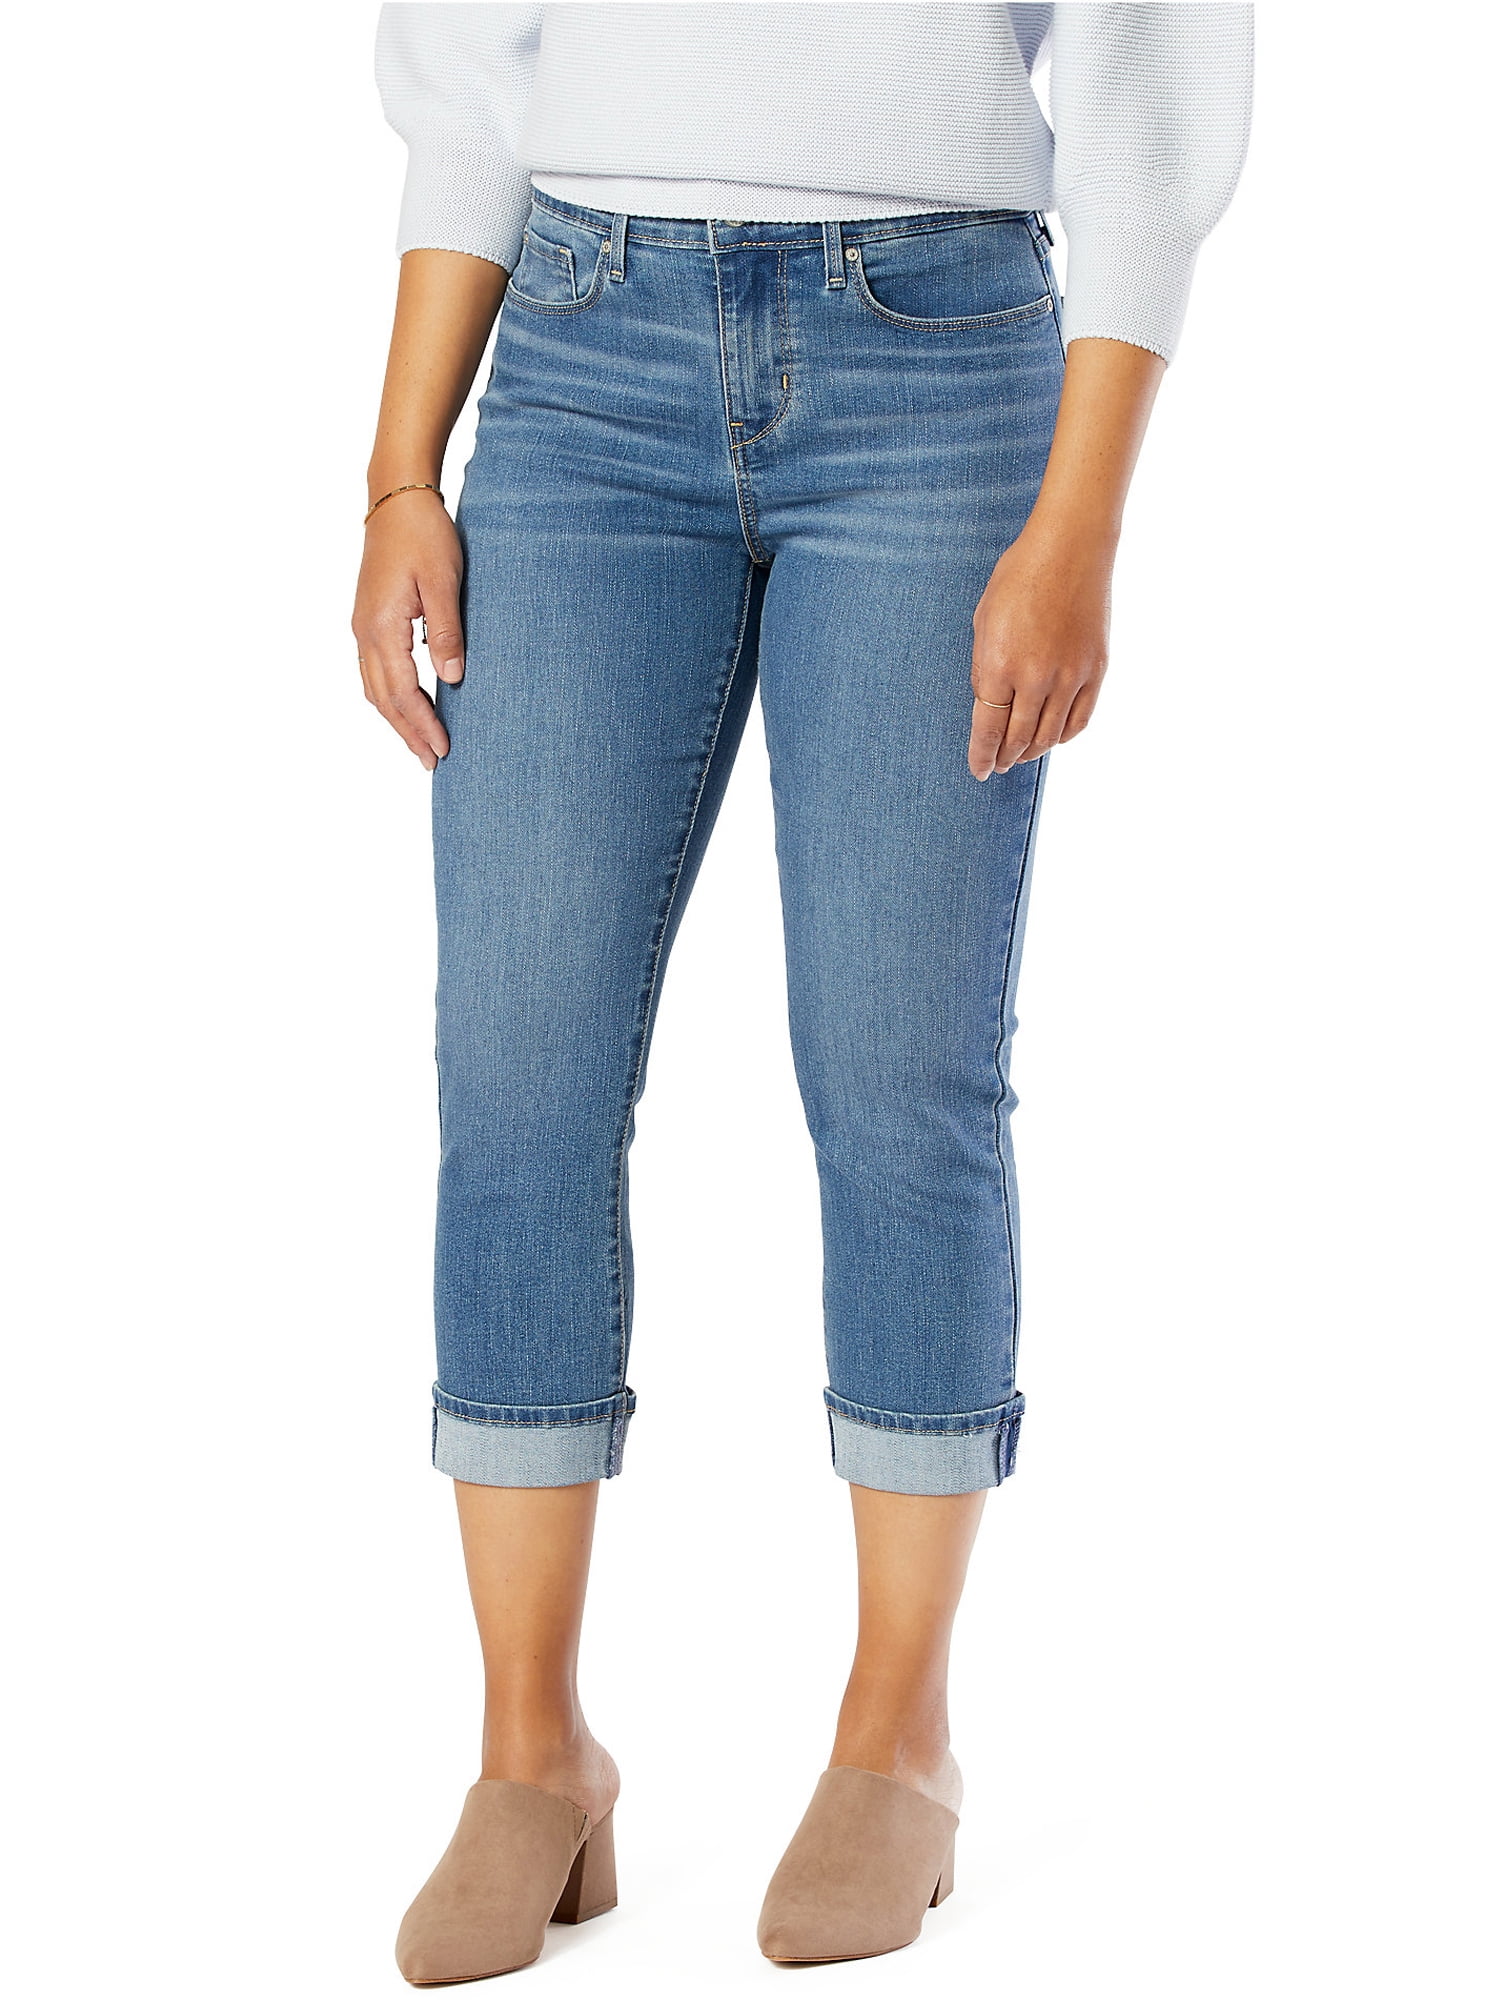 Levis jean capri or cropped pantladies size 14classic quality jeans